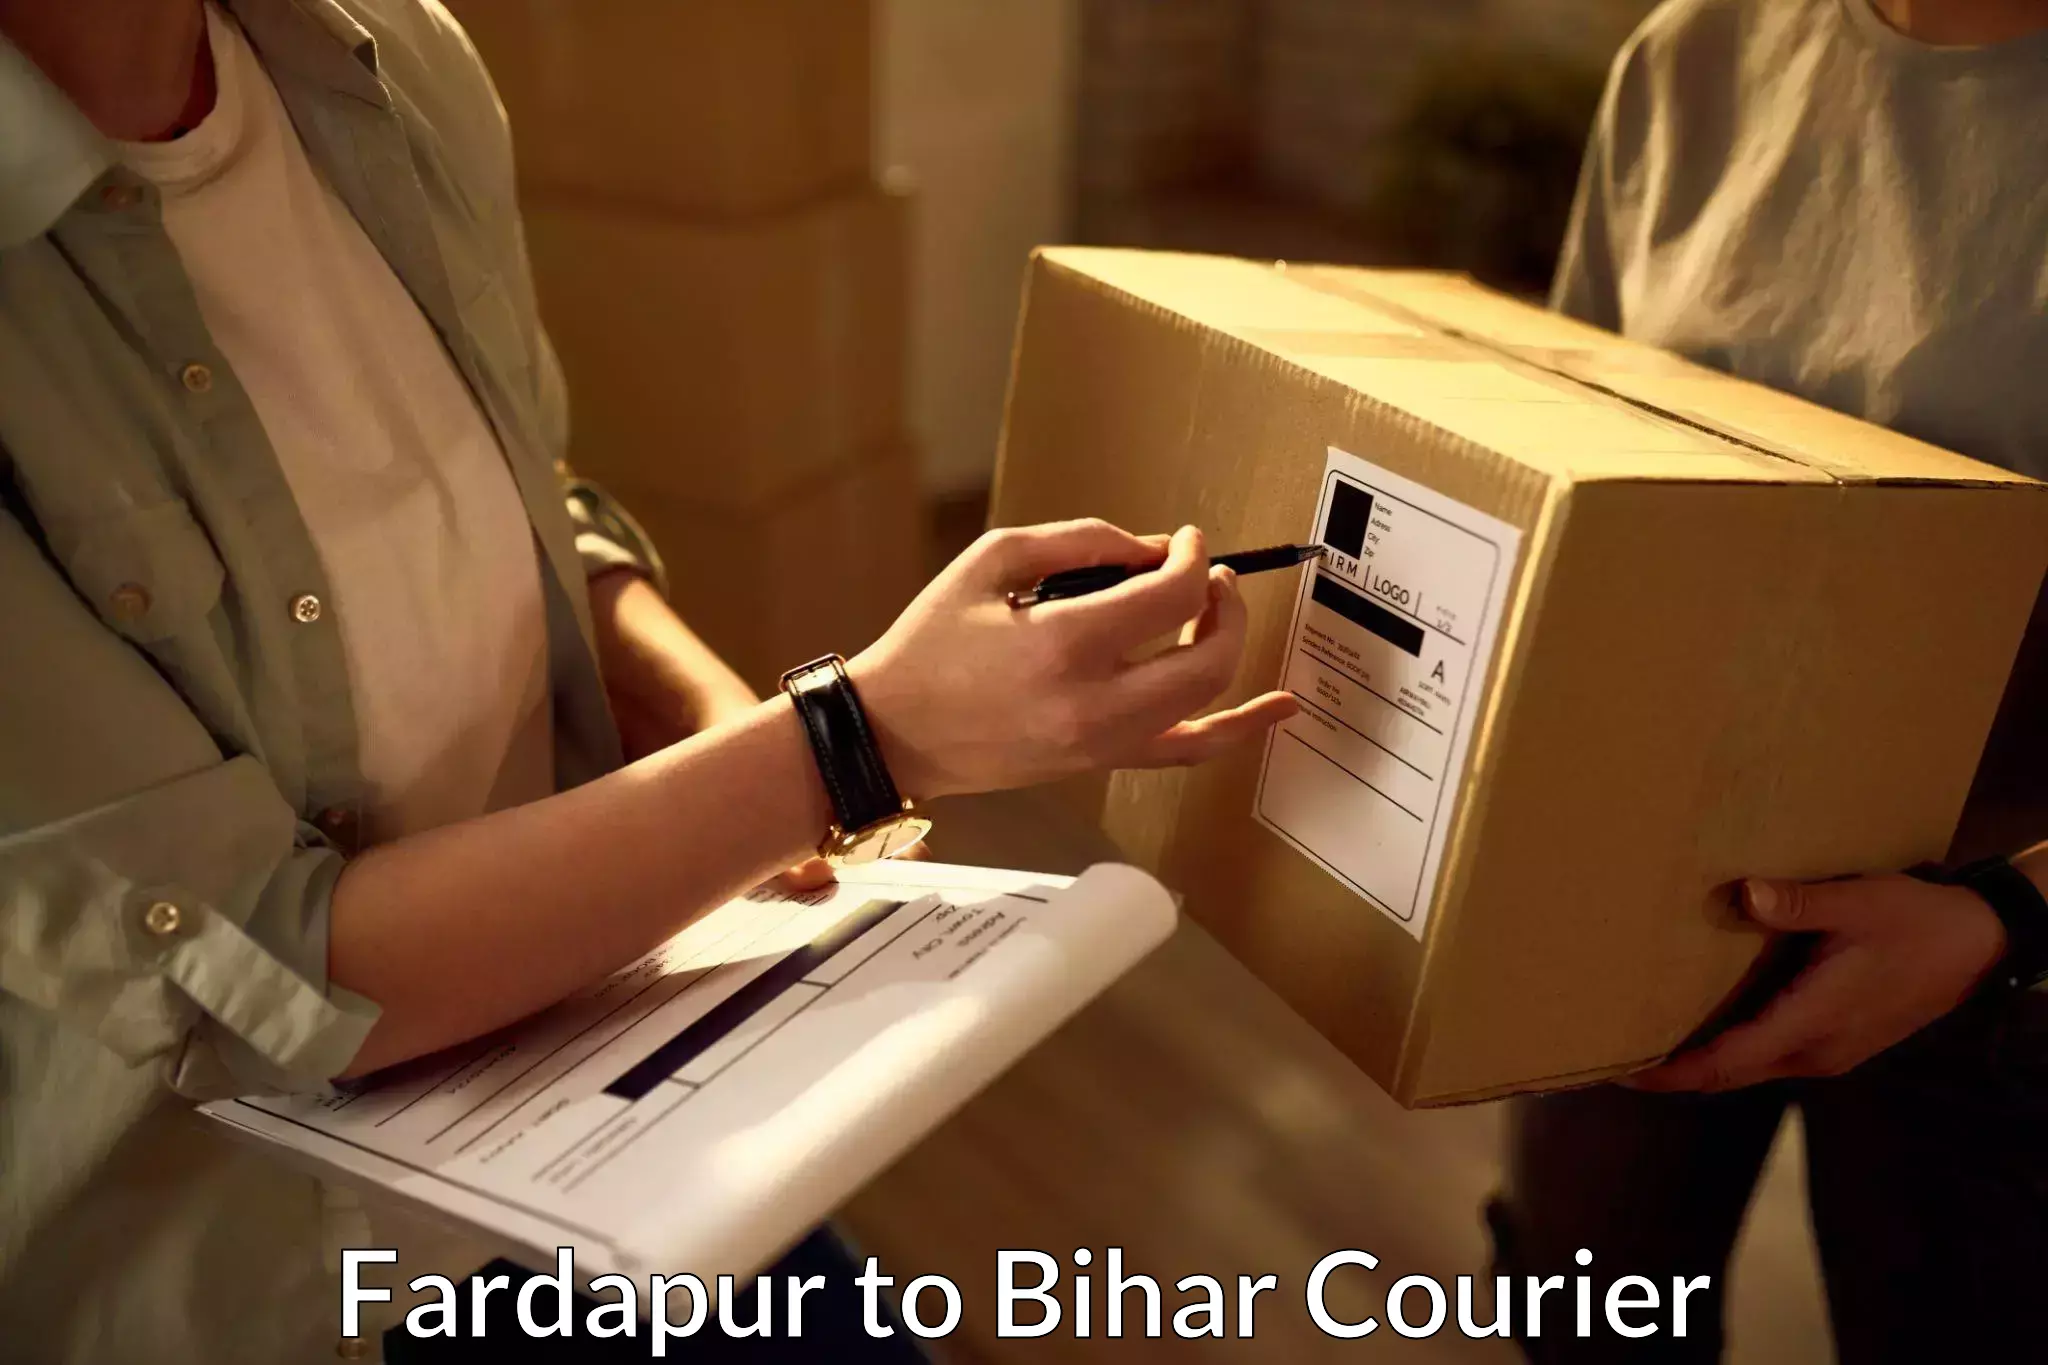 Courier app Fardapur to Bihar